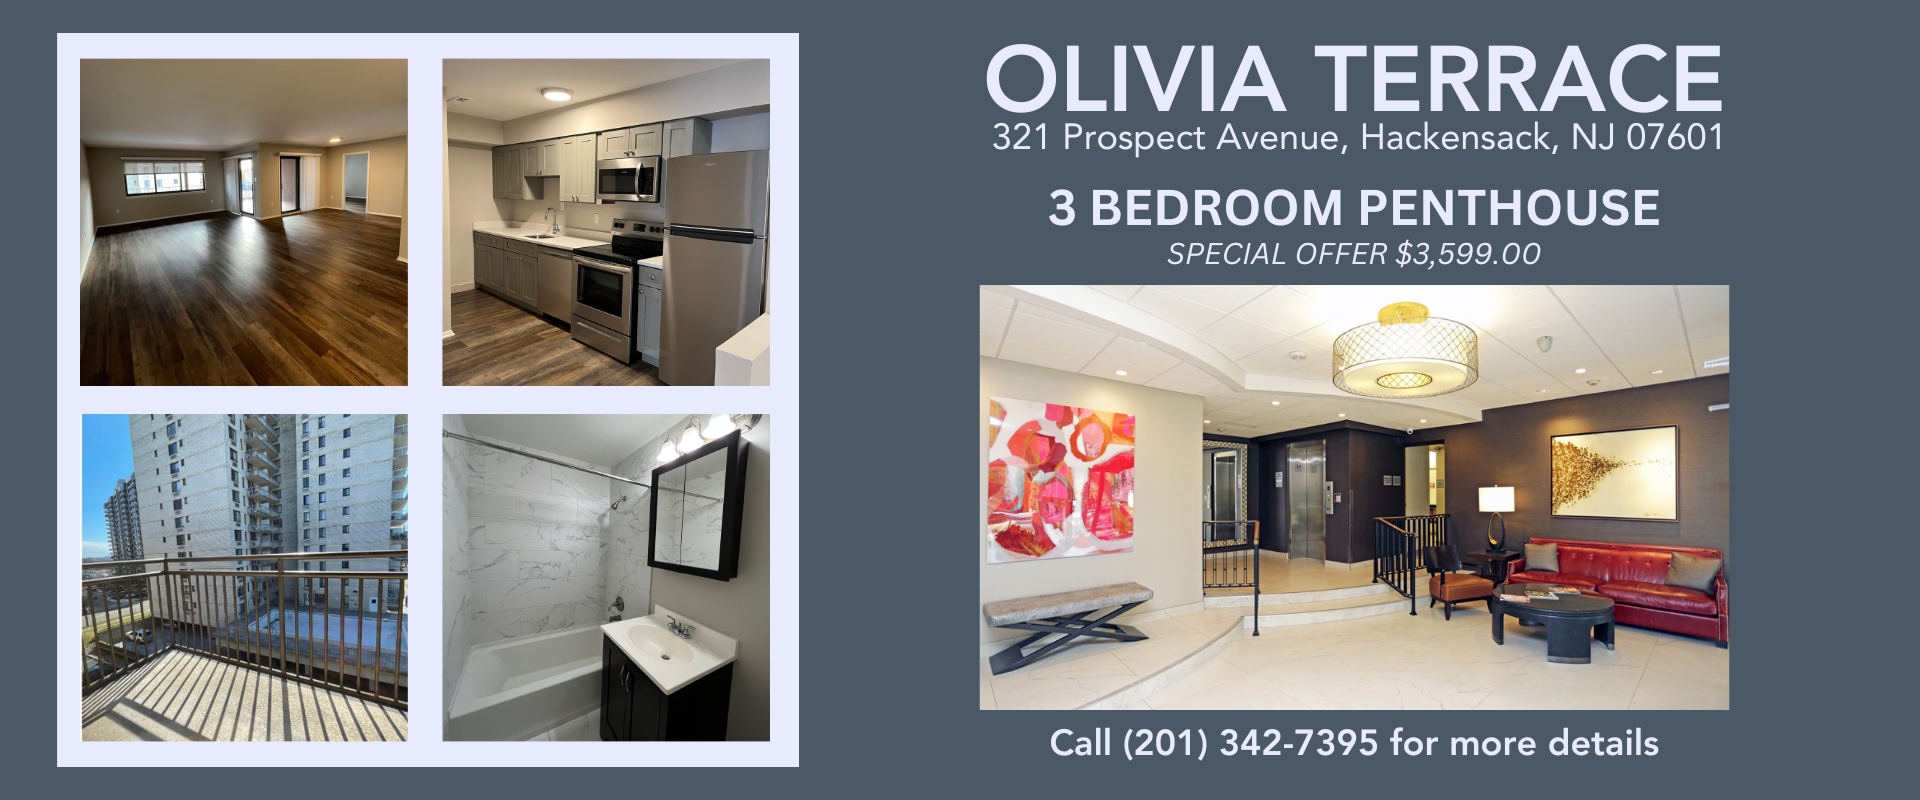 OLIVIA TERRACE  321 Prospect Avenue, Hackensack, NJ 07601 3 BEDROOM PENTHOUSE SPECIAL OFFER $3,599.00